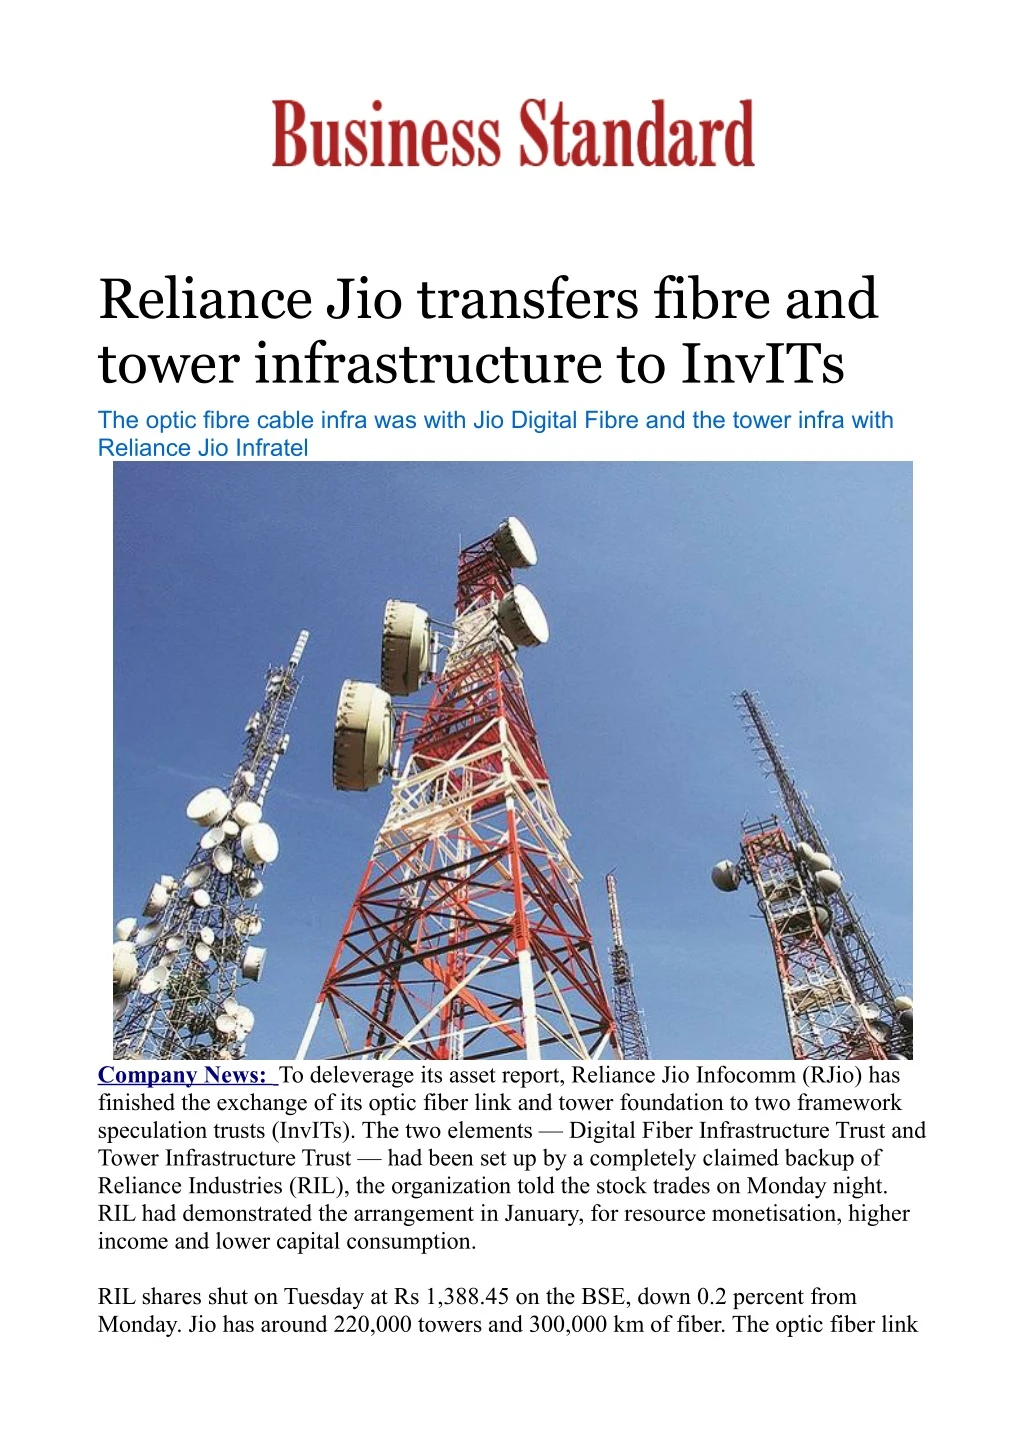 reliance jio transfers fibre and tower